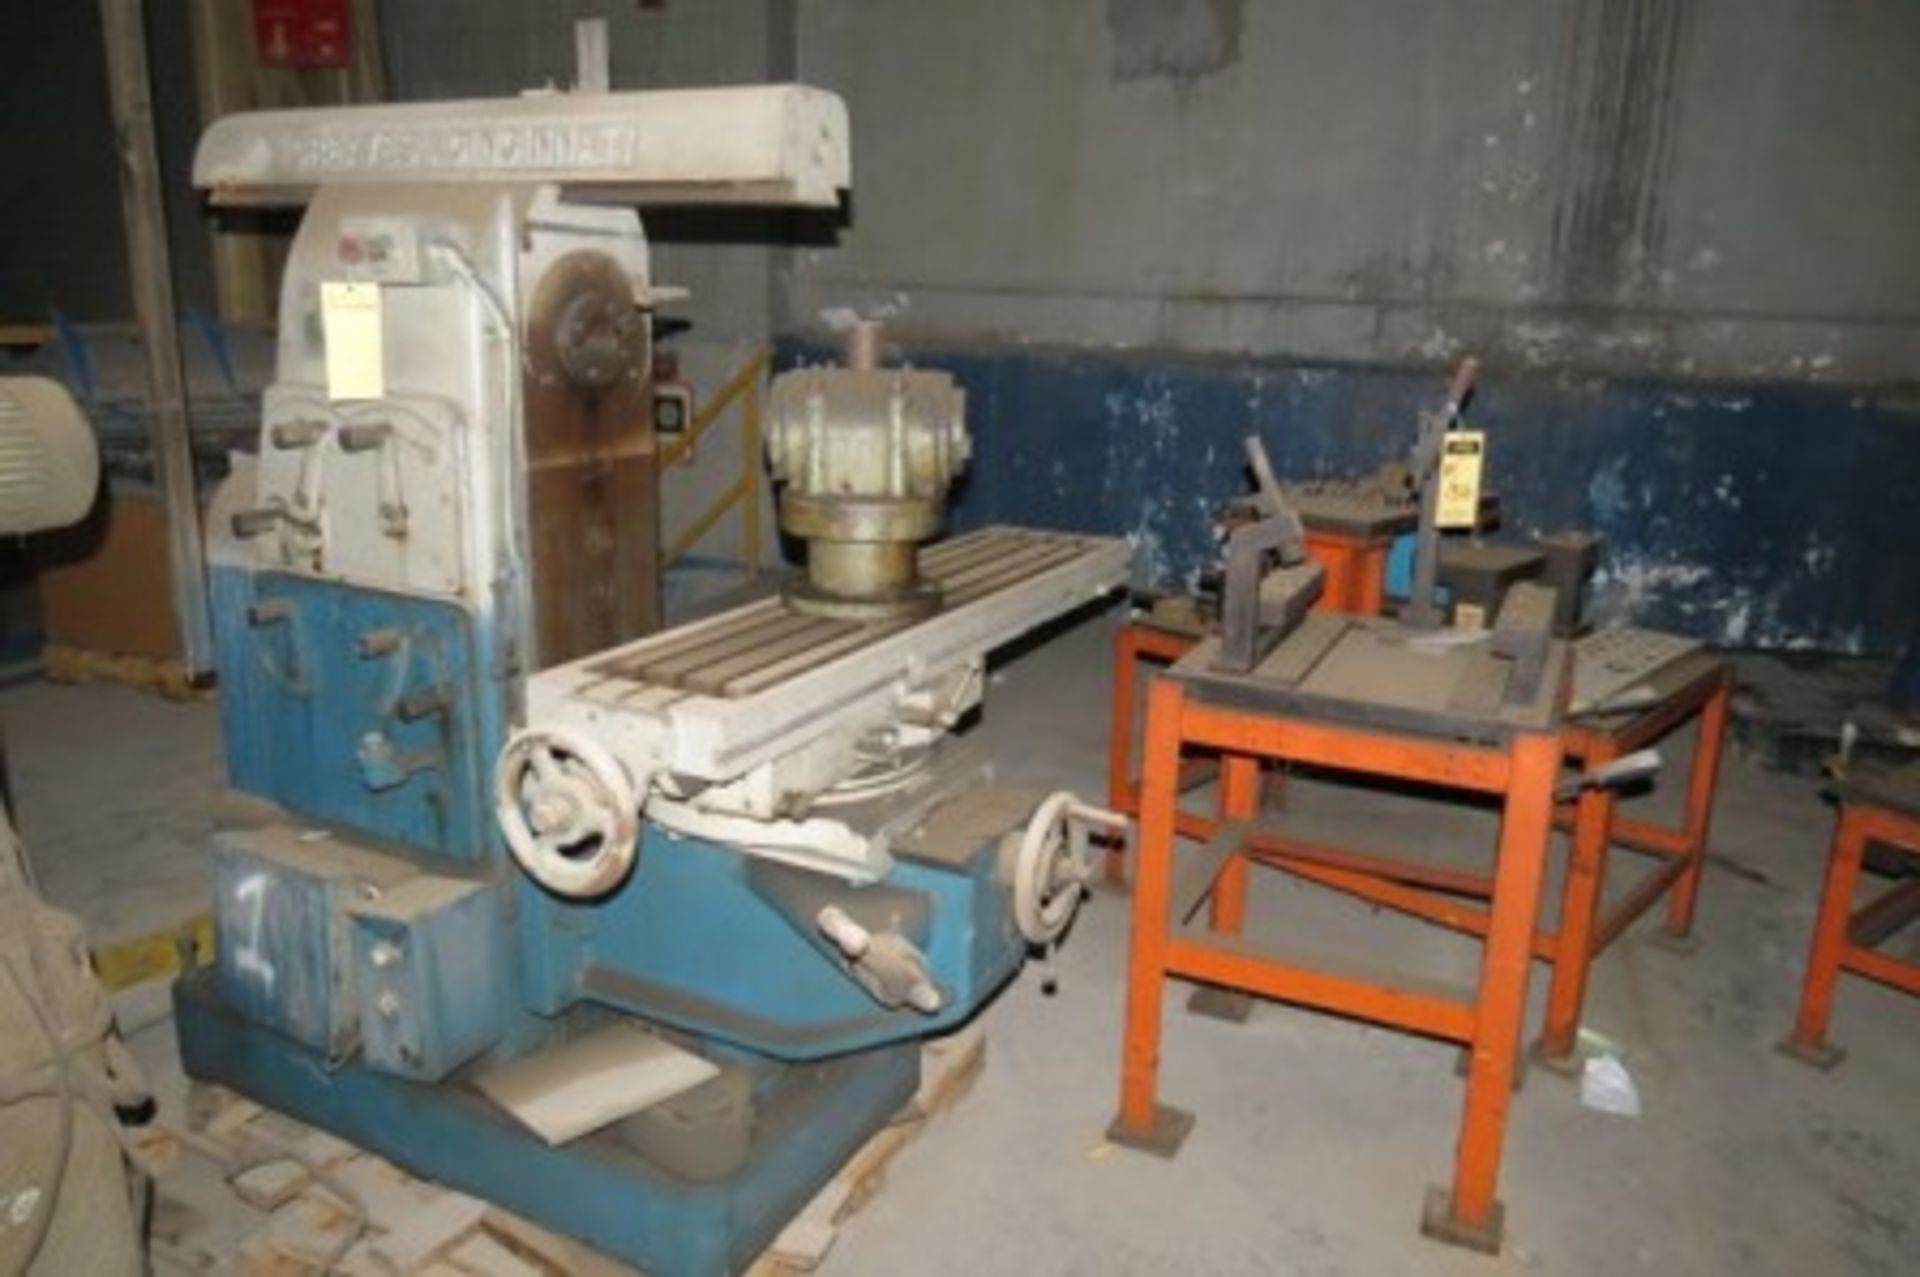 Leco CM-24 cut off saw. FSG surface grinder. Cincinnati 2 milling machine. Pneumatic gauge